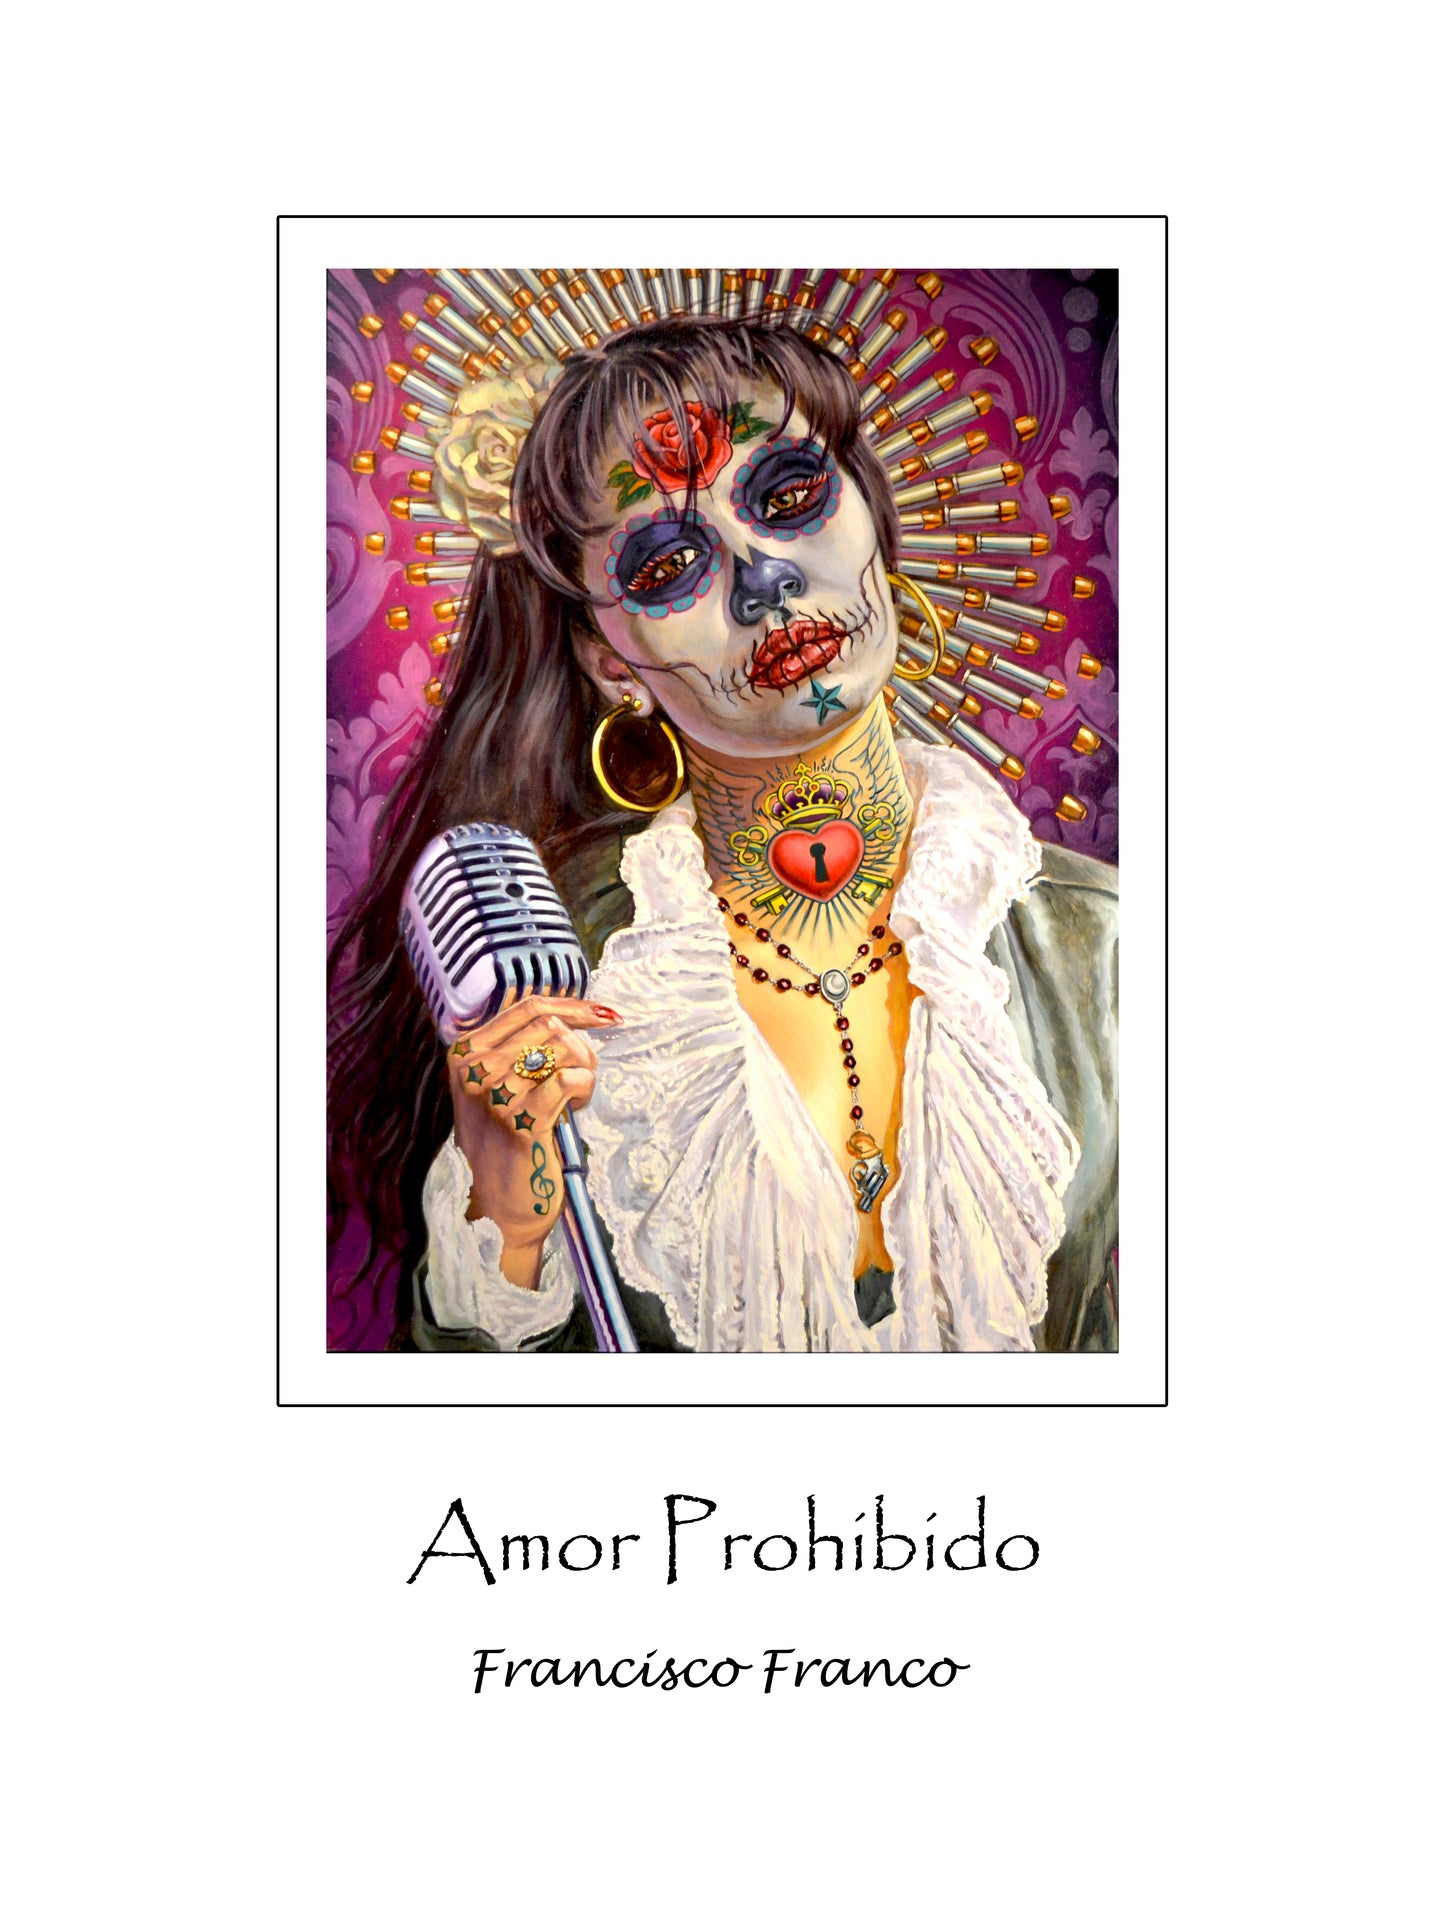 Limited Edition "Amor Prohibido" Print